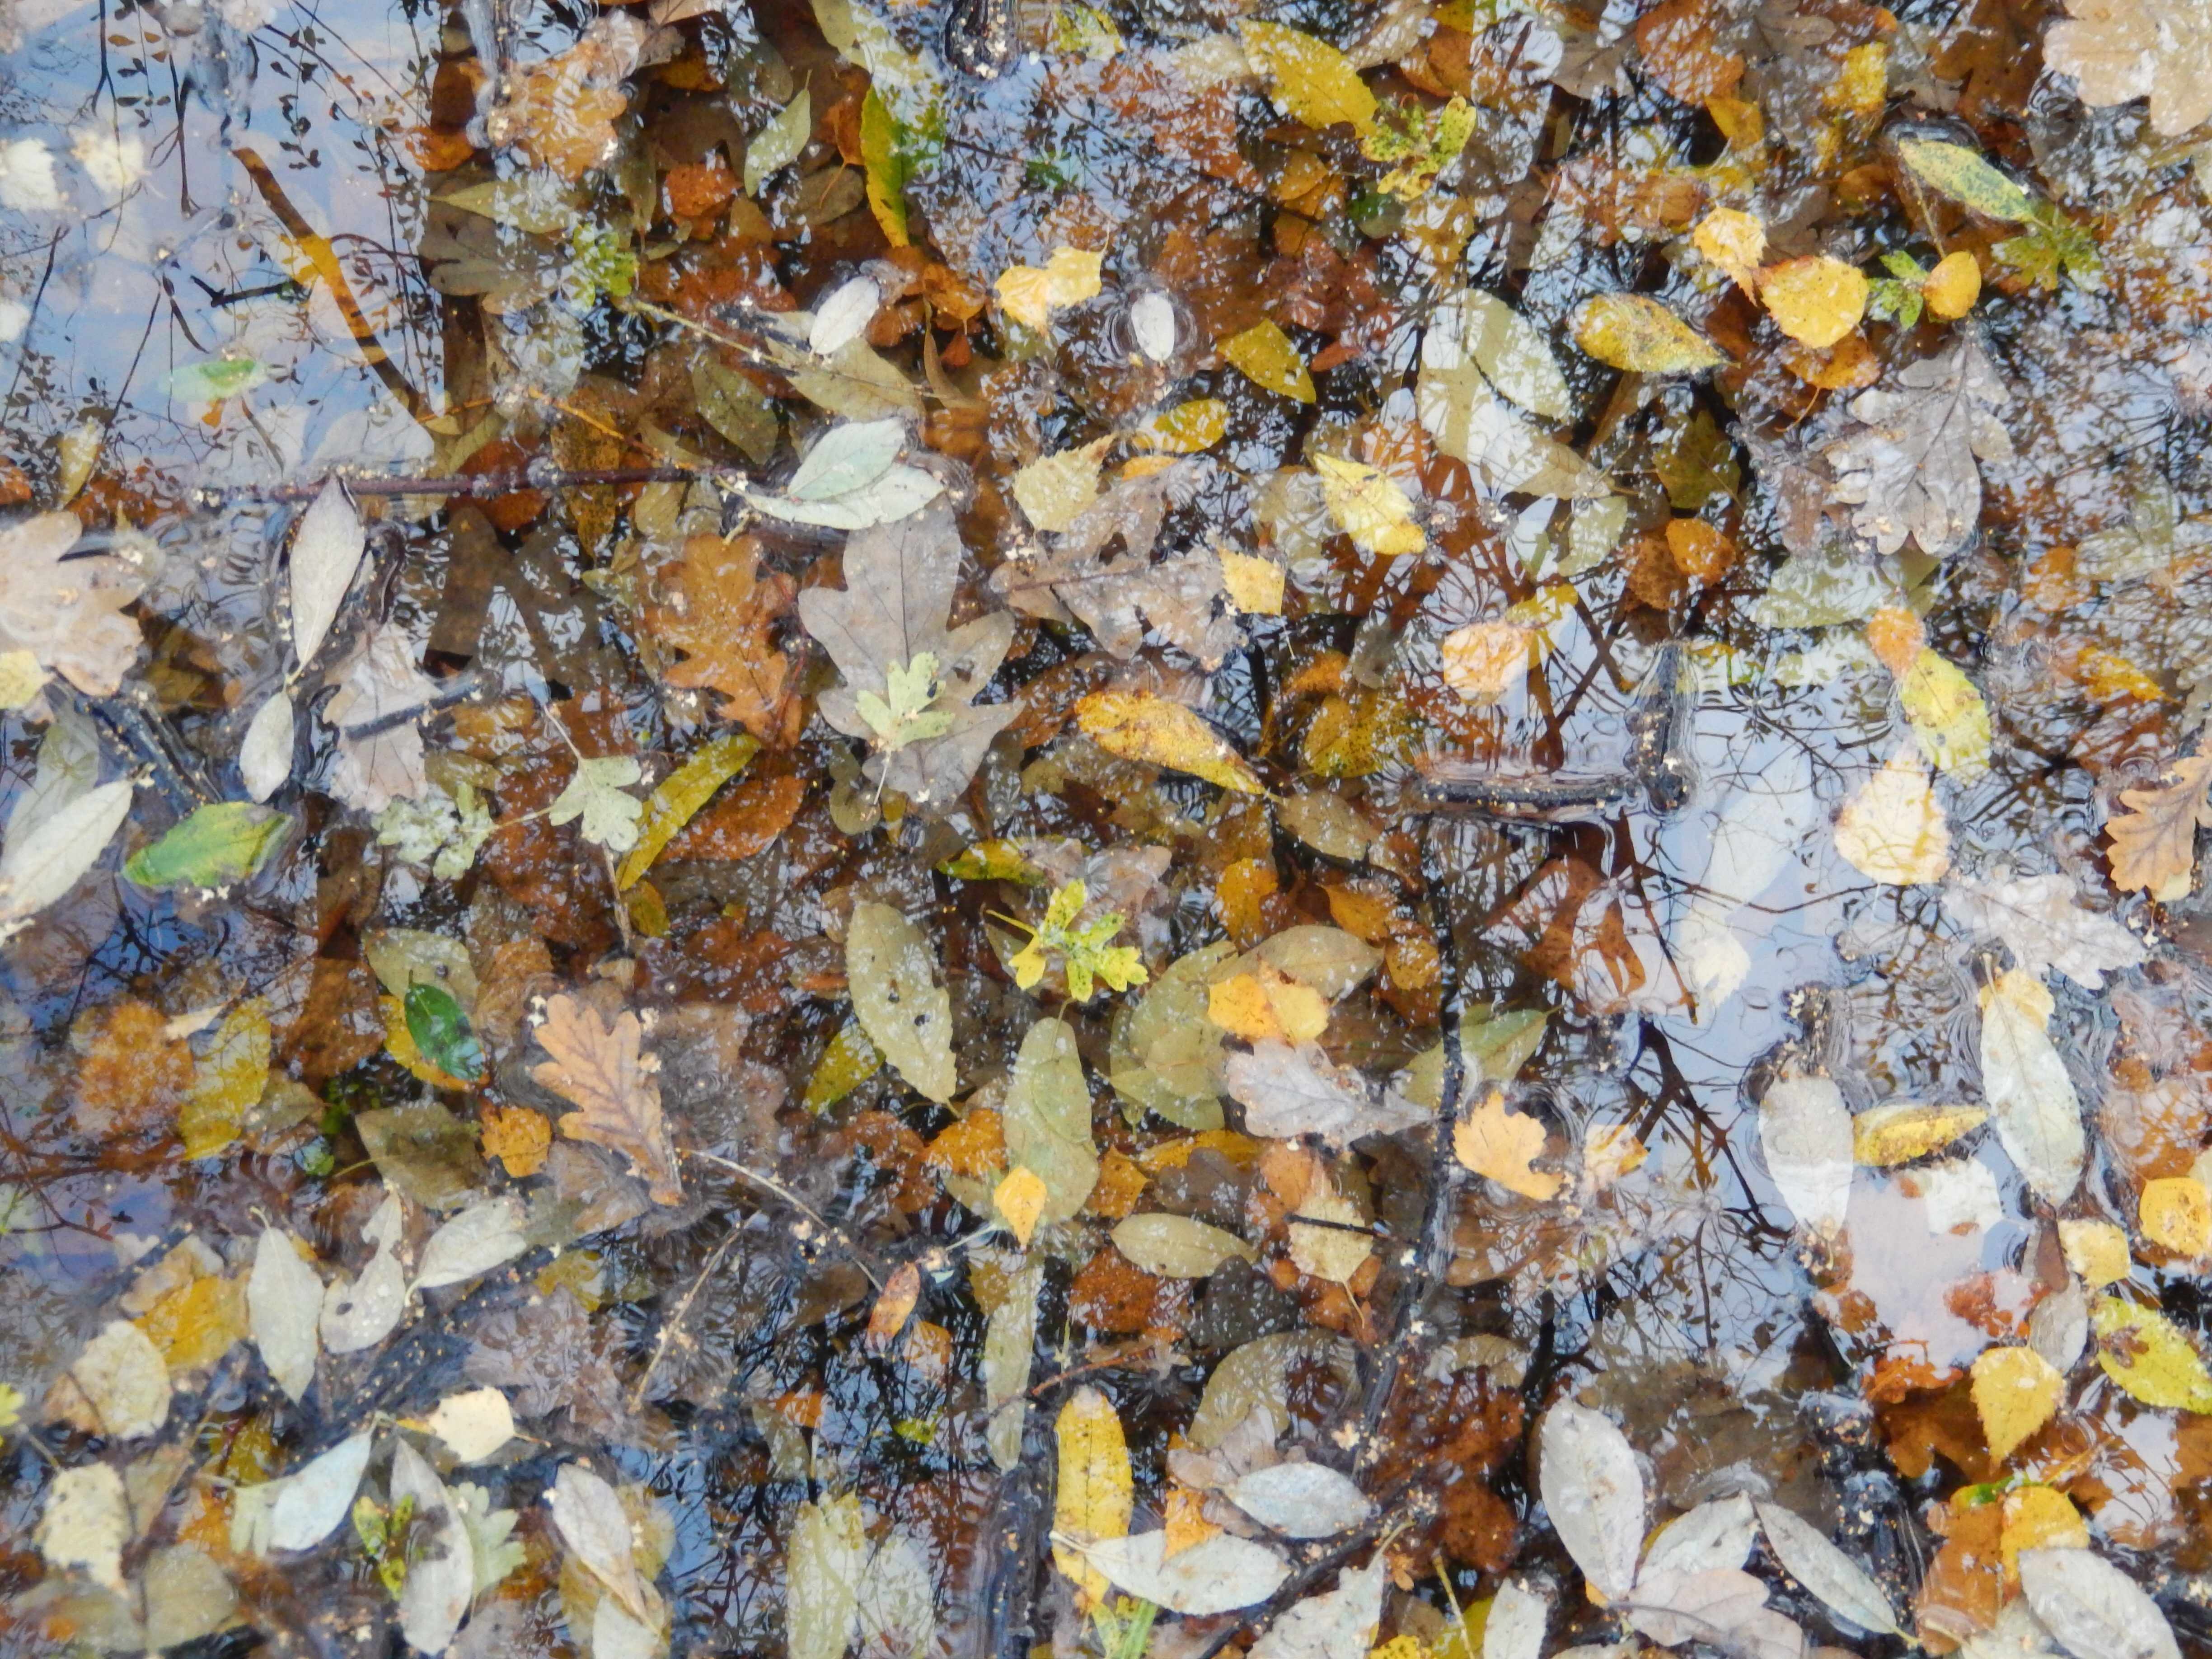 Fallen Leaves in Water | ObsessedByNature